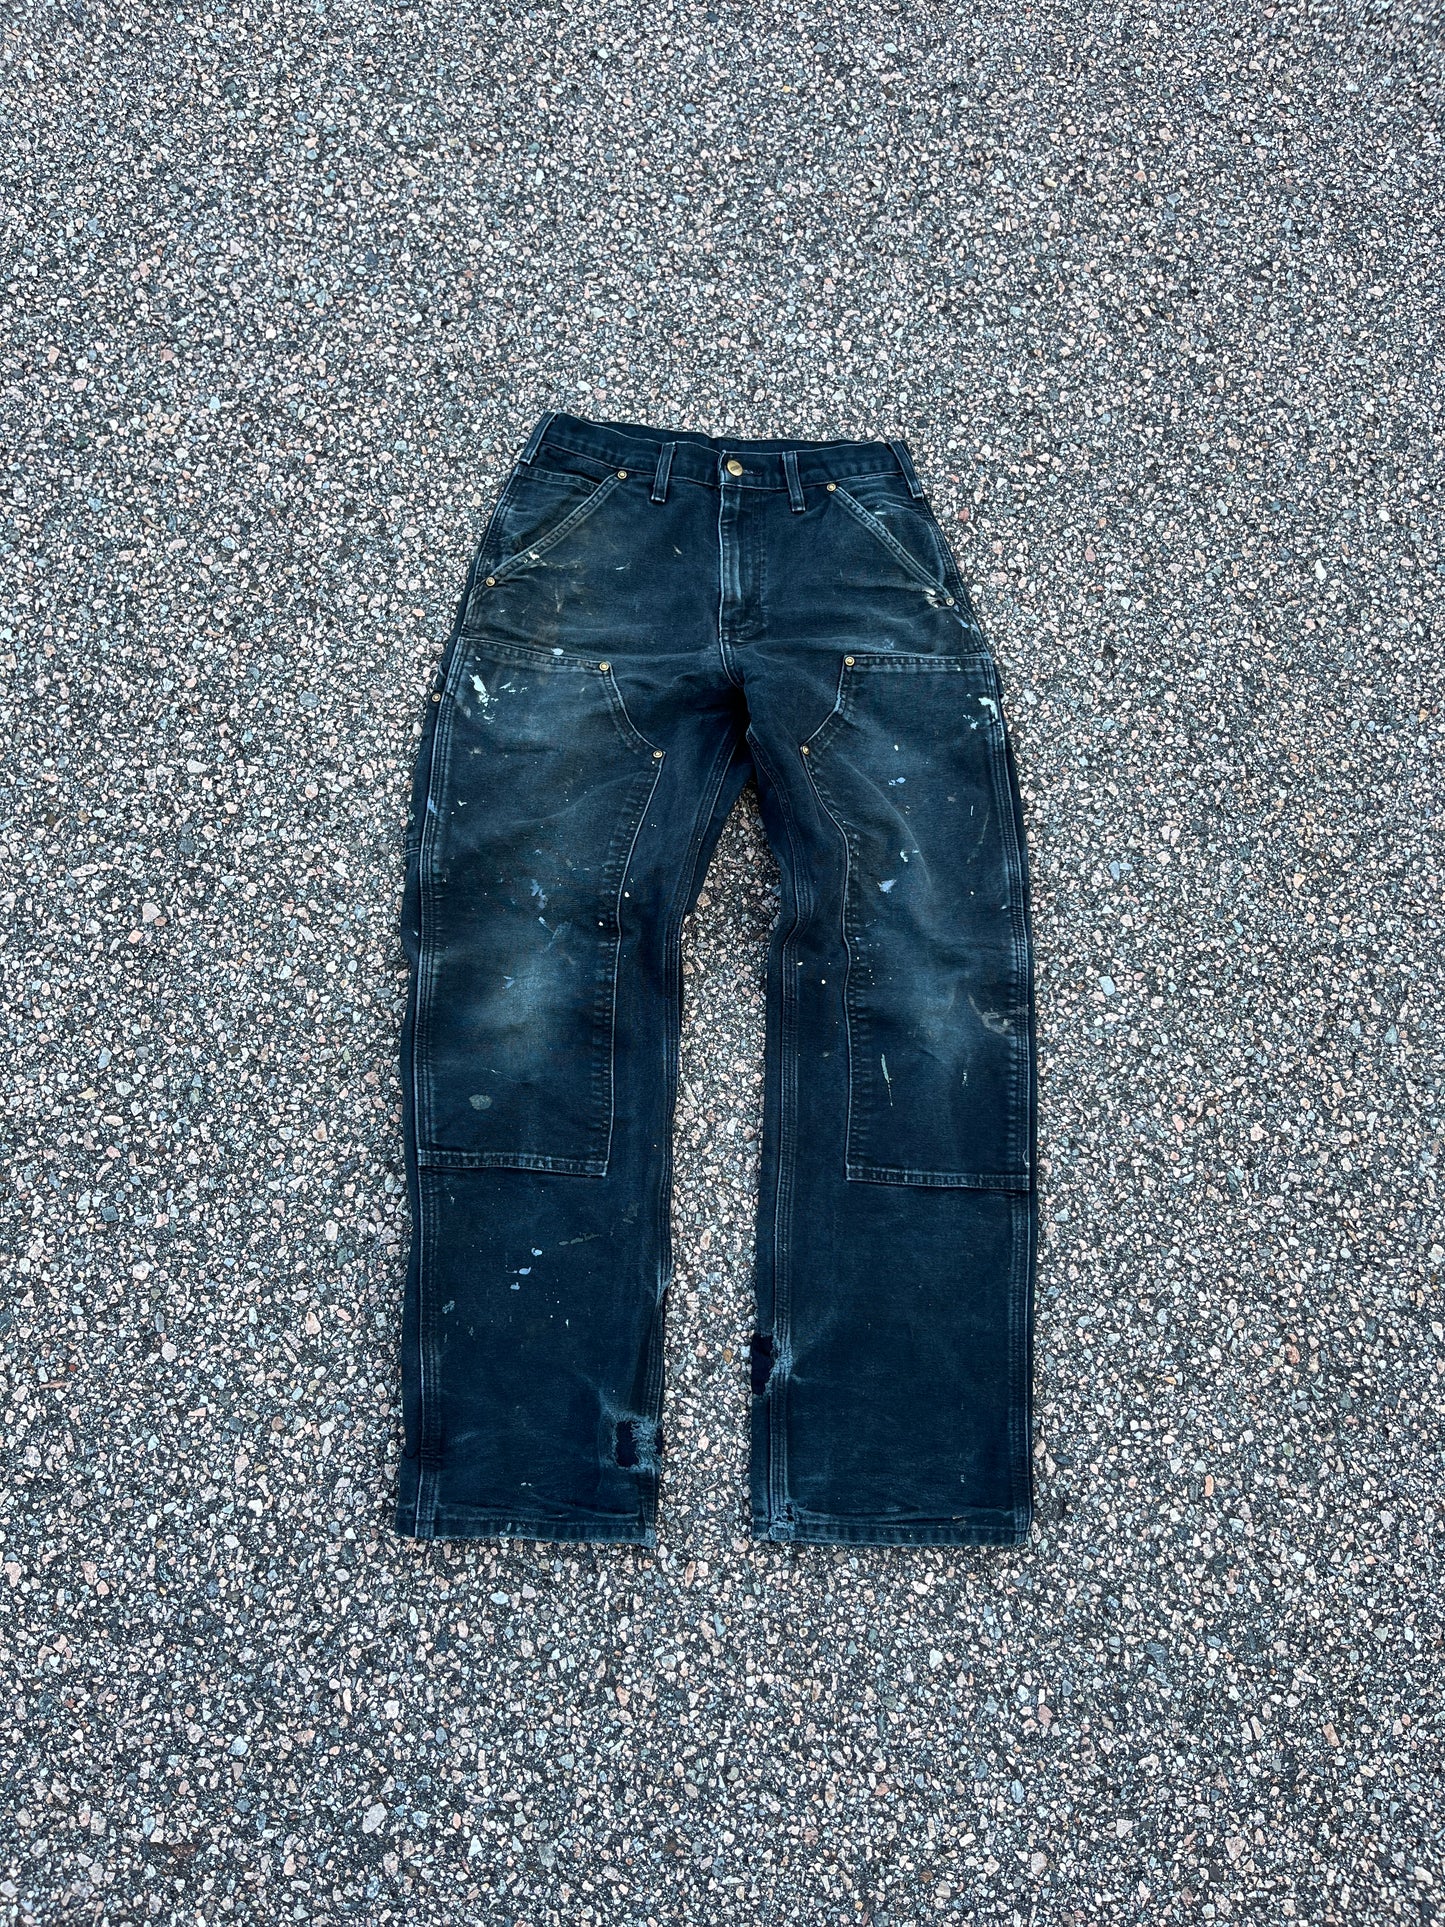 Faded Black Carhartt Double Knee Pants - 28 x 30